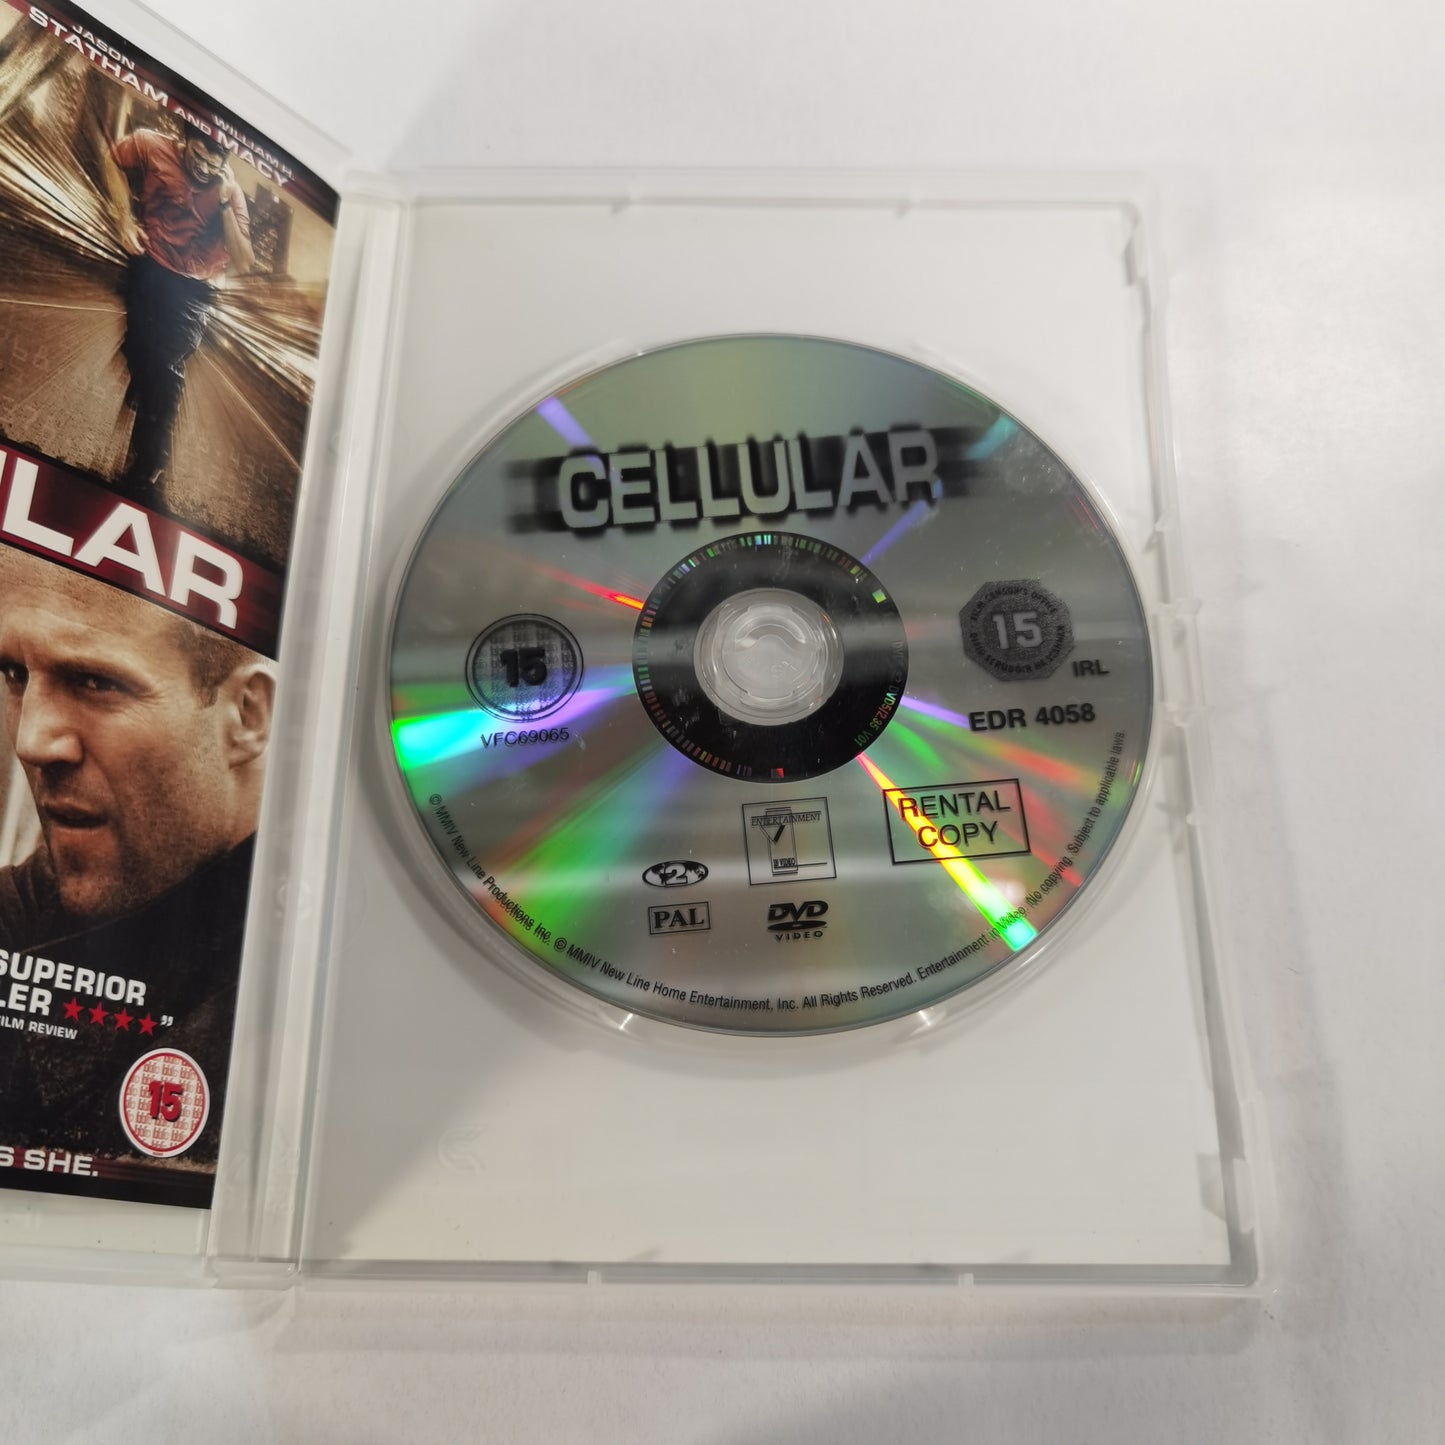 Cellular (2004) - DVD UK